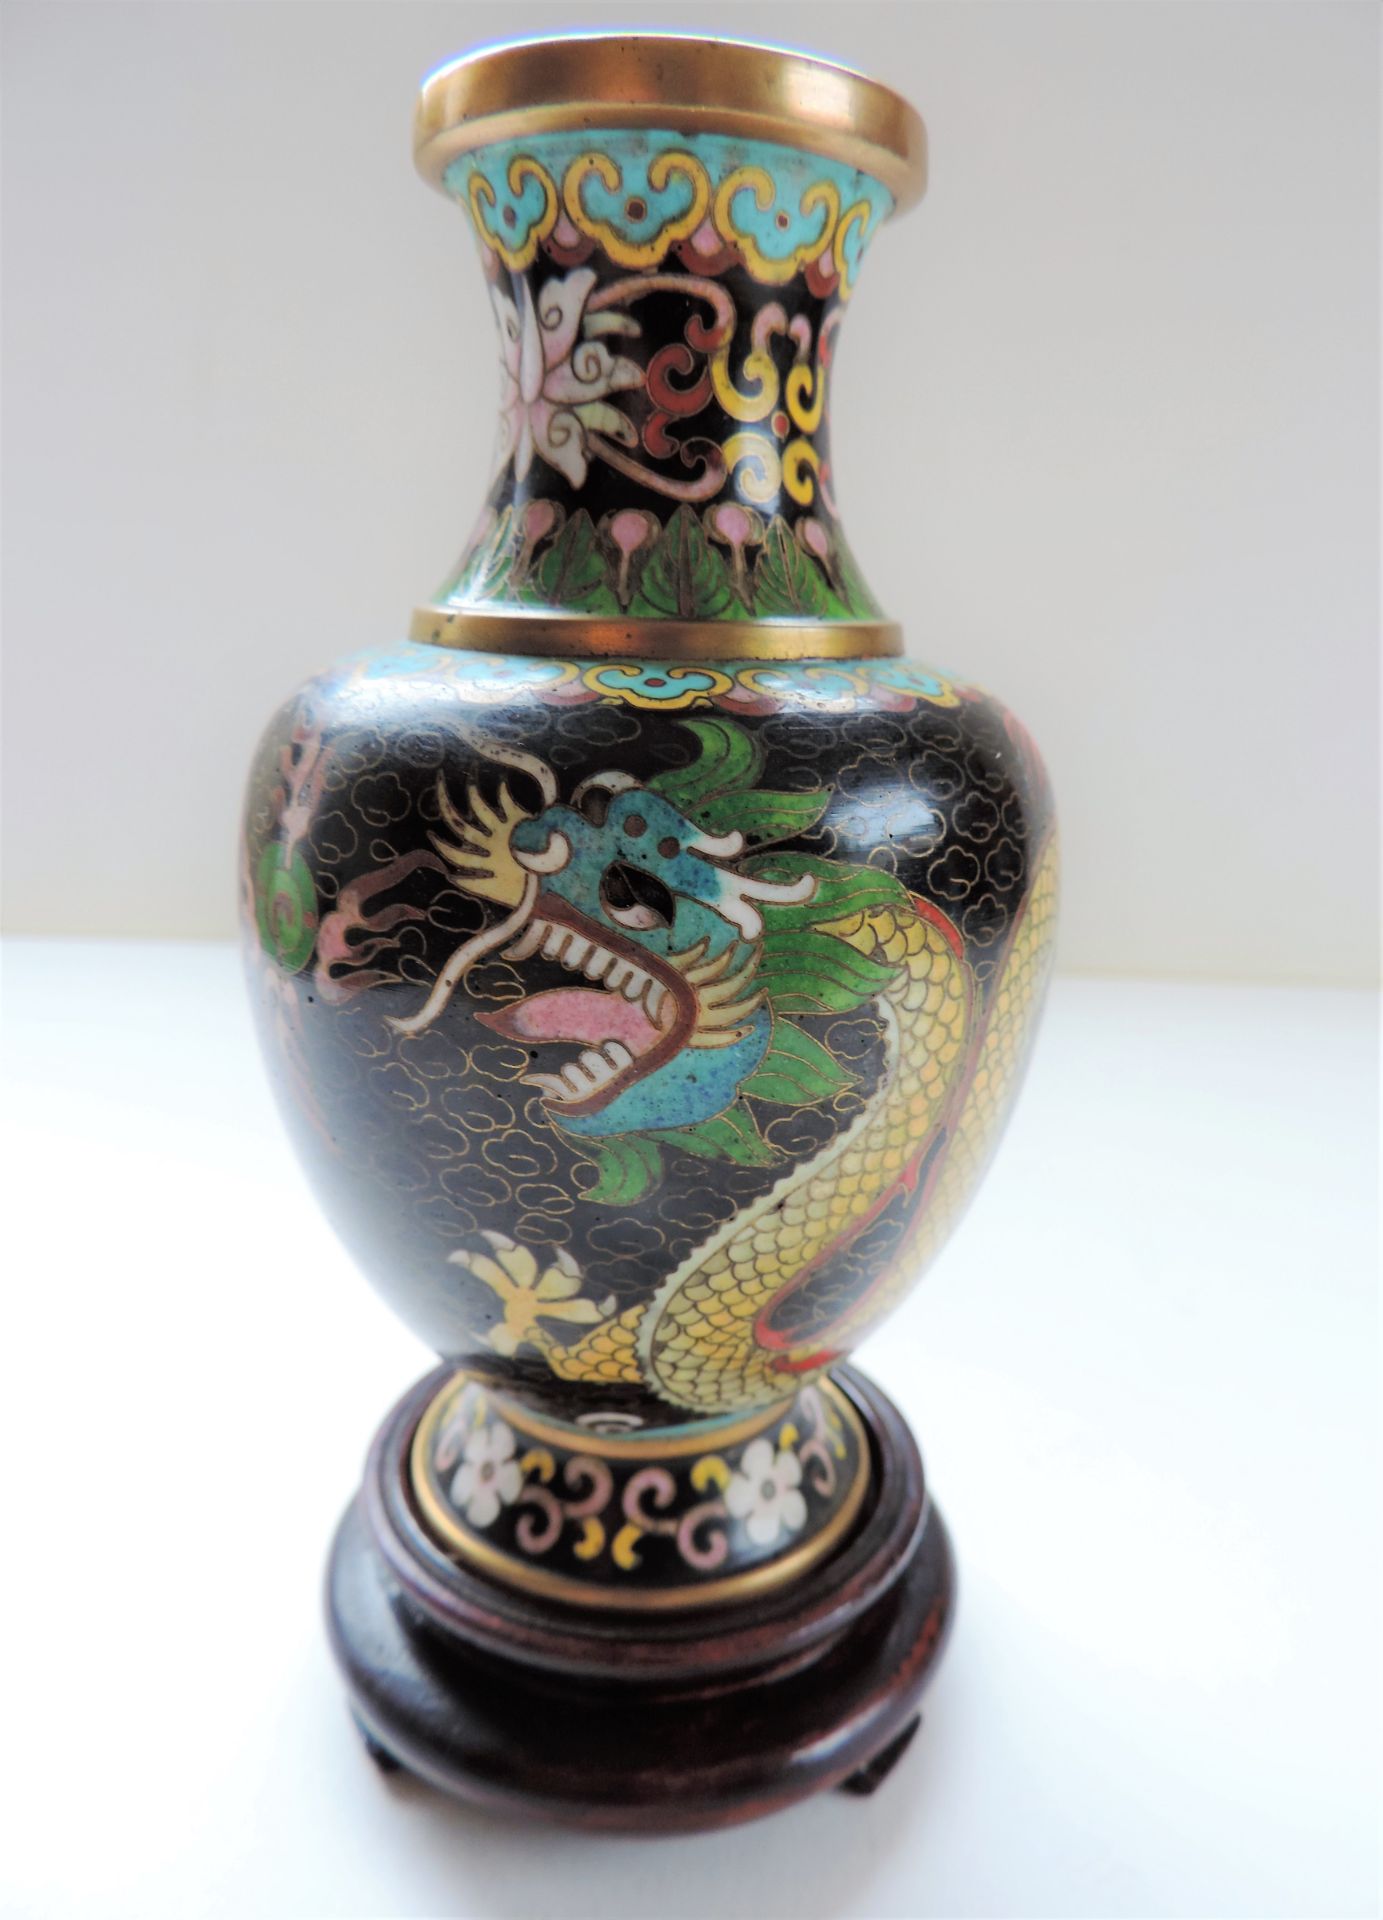 Vintage Cloisonne Imperial Dragon Vase 16cm tall